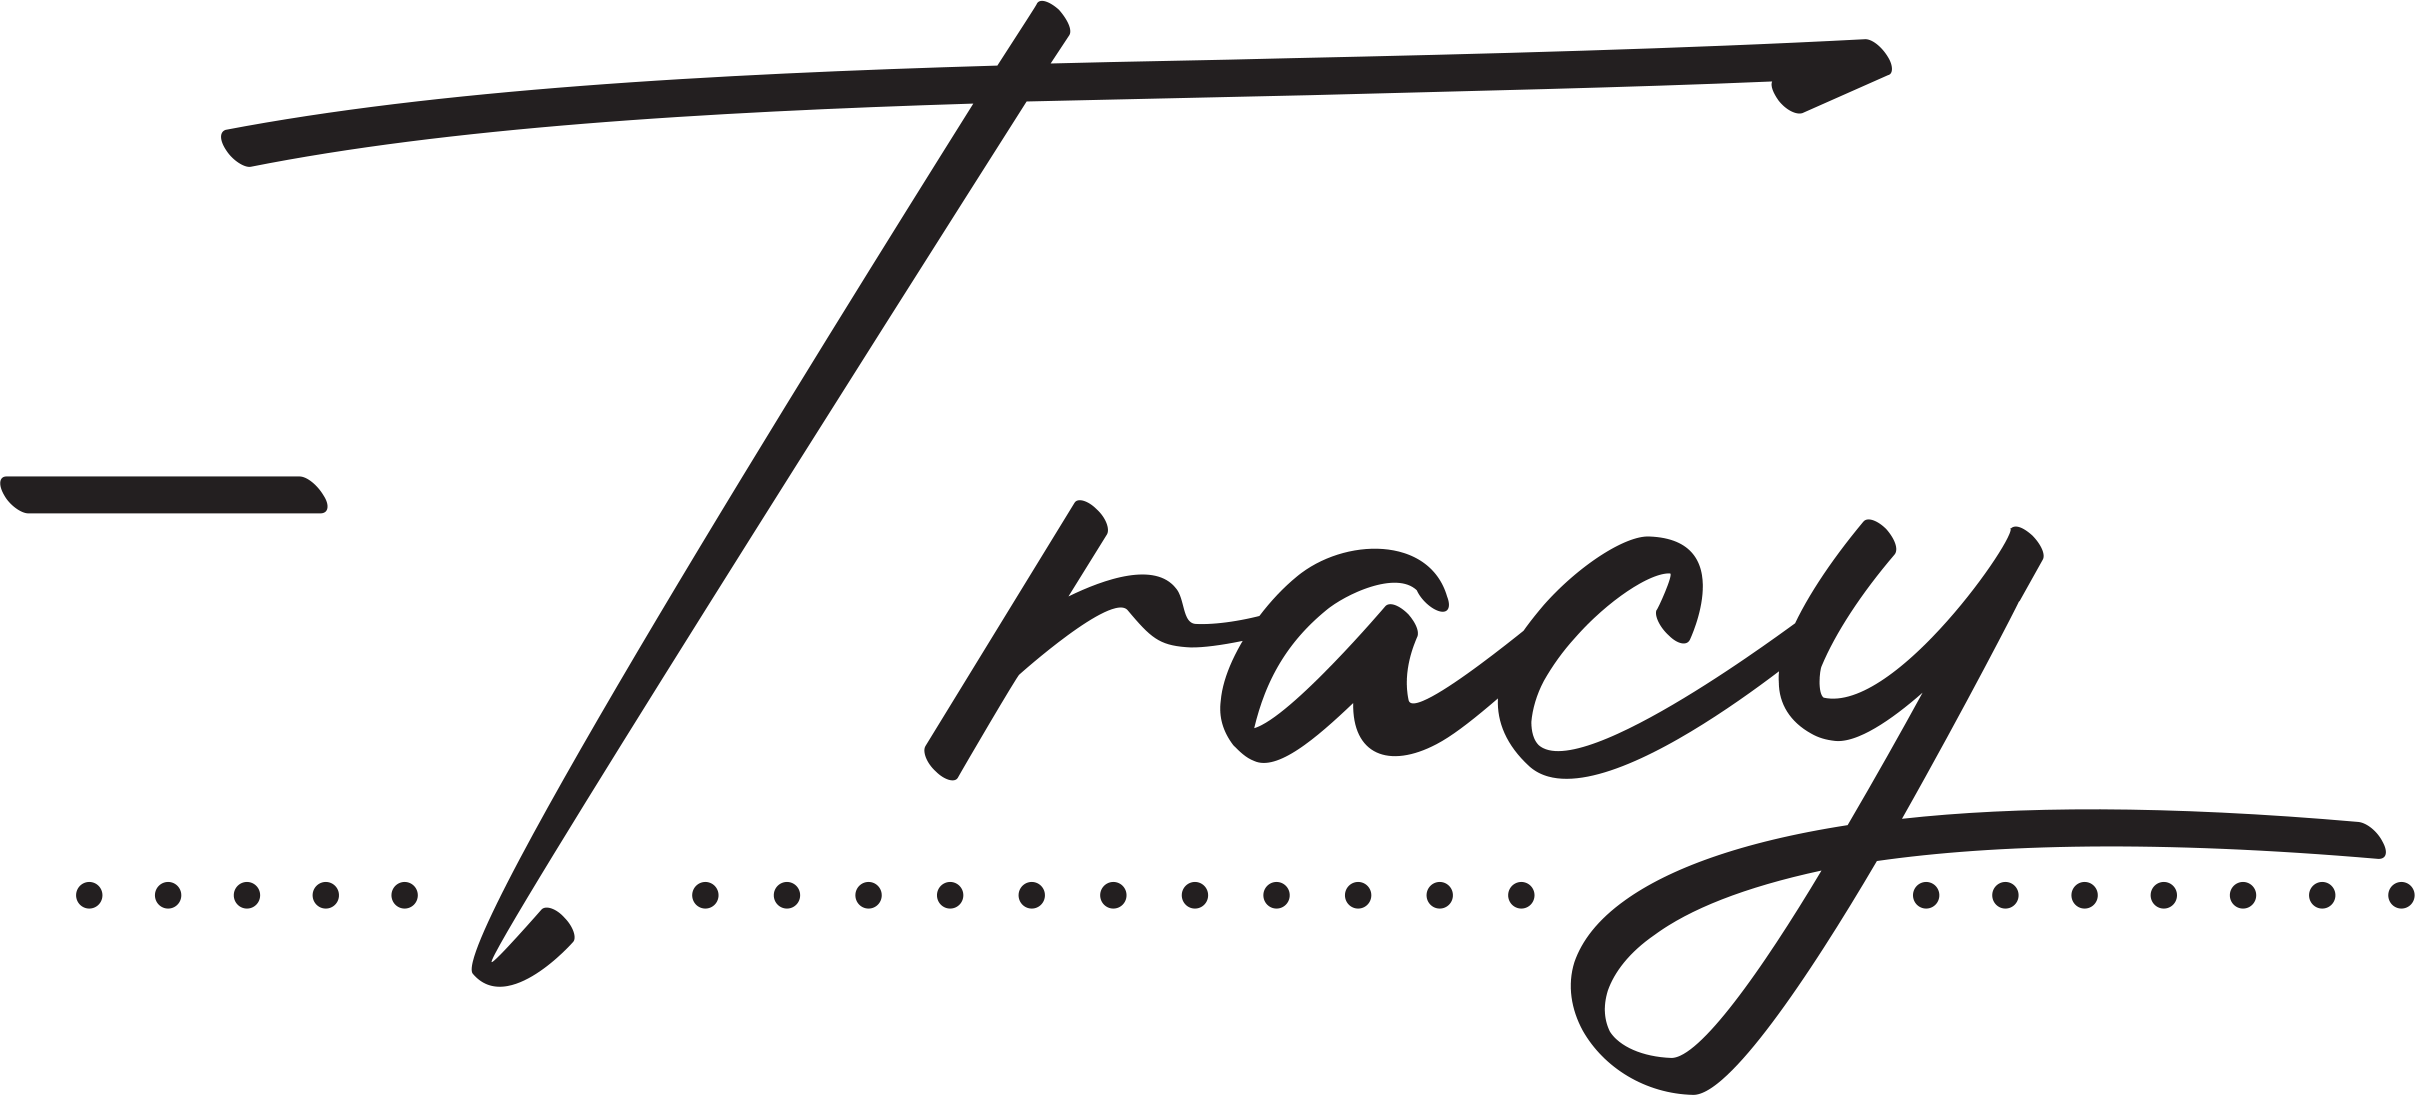 Tracy signature